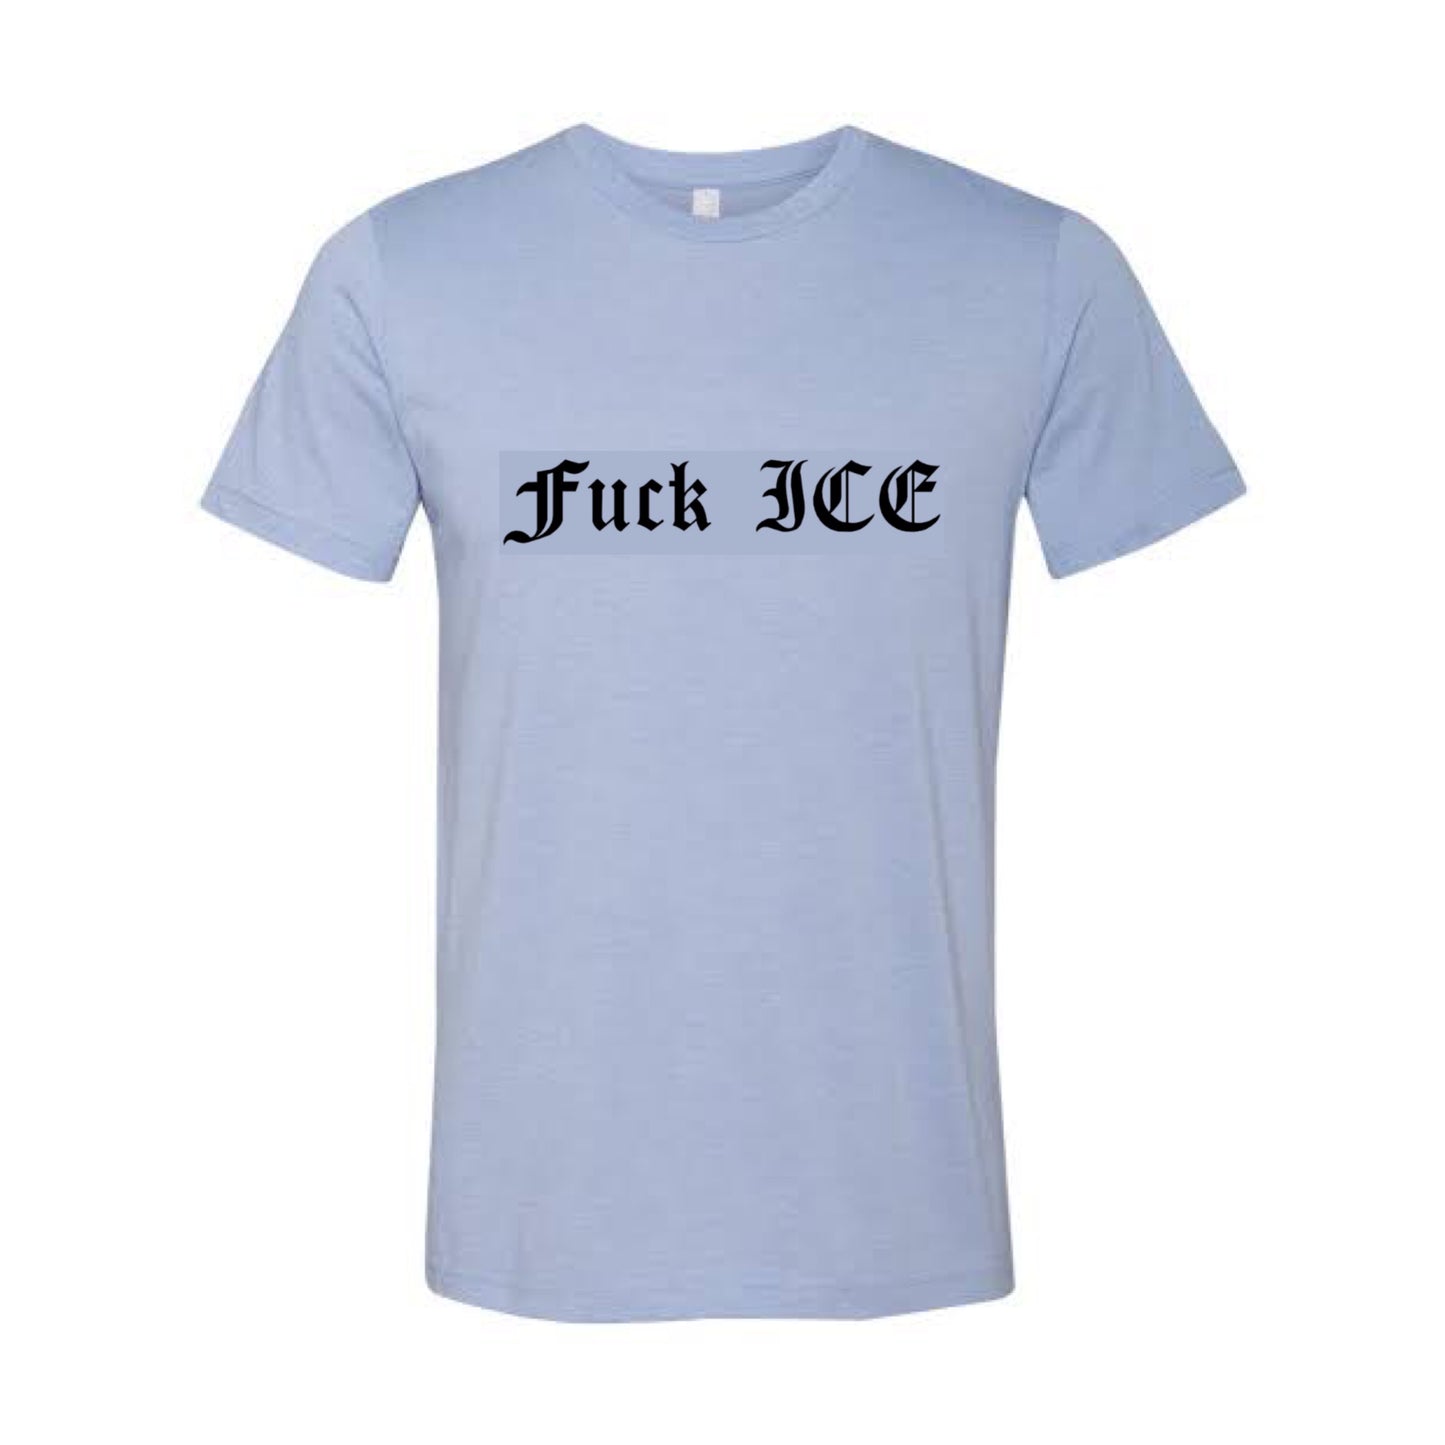 Fuck ICE unisex short-sleeve T-shirt